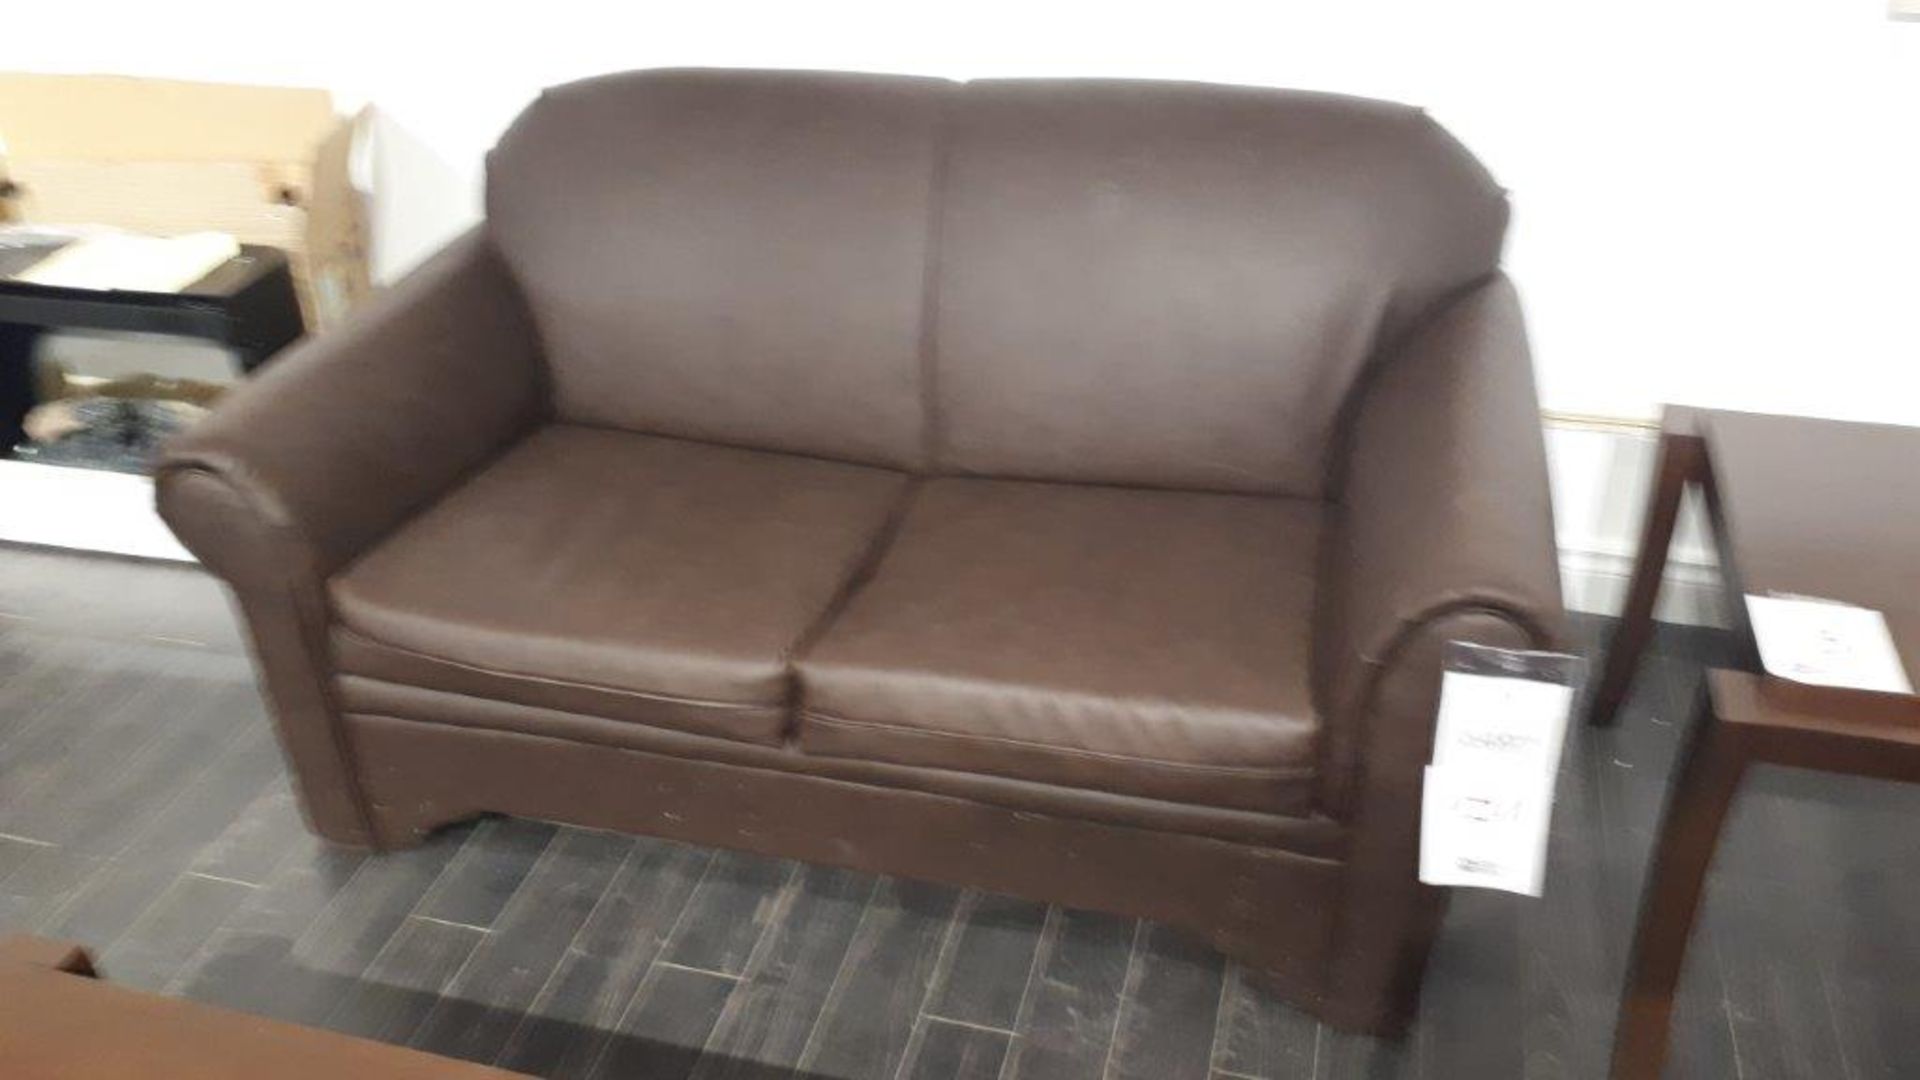 Leather (bicast) sofa, 2 seat - Image 2 of 3